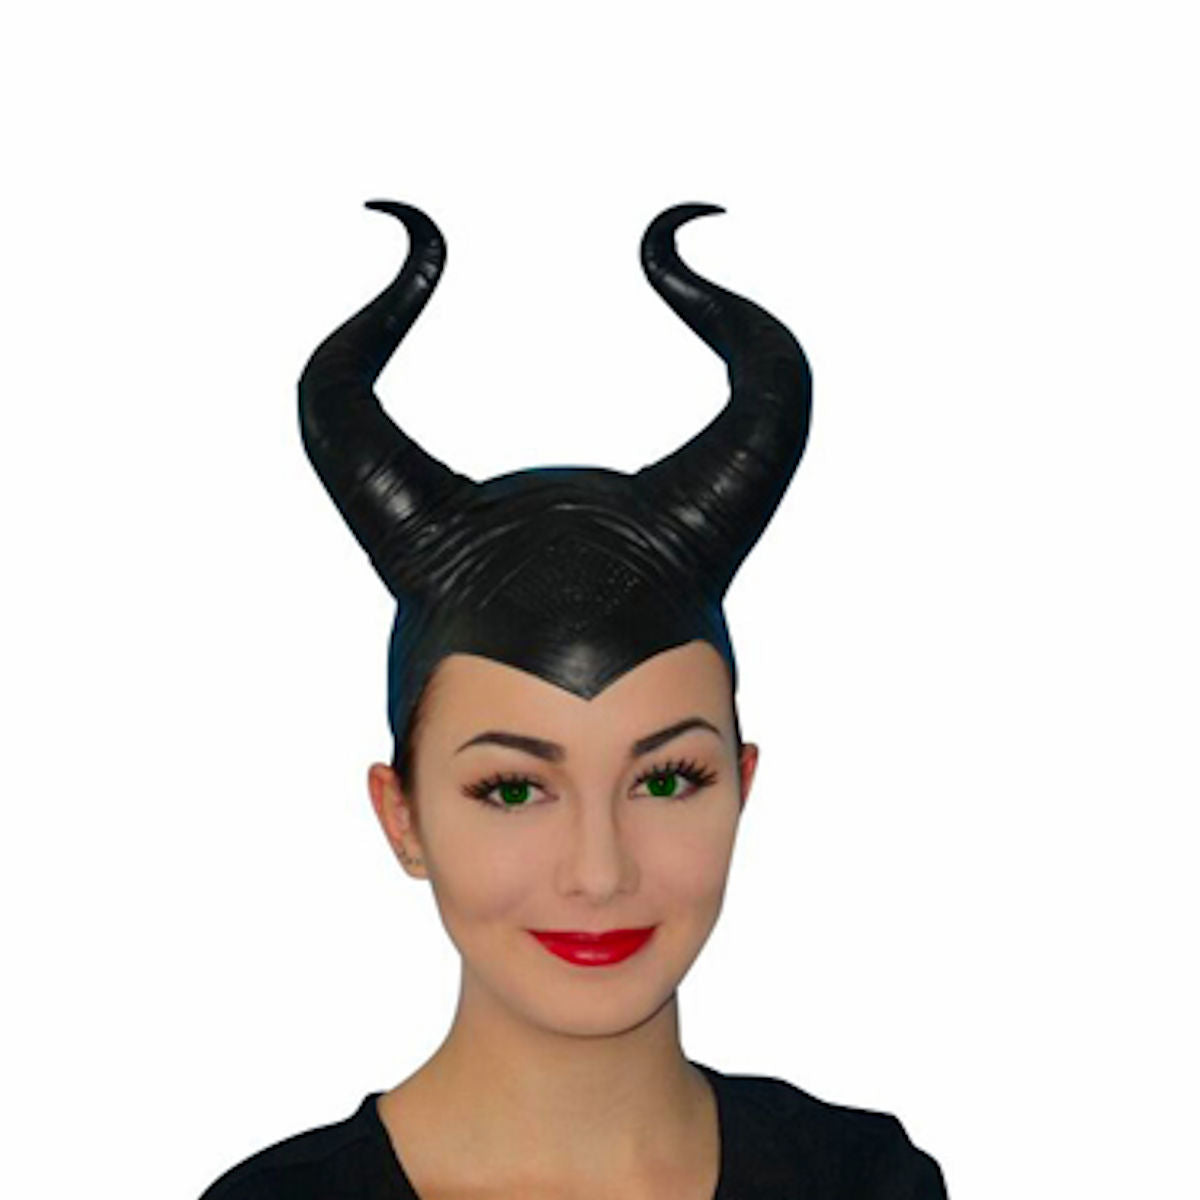 Maleficent Black Horns Deluxe Headpiece 18cm High Latex Fairy Costume Accessory